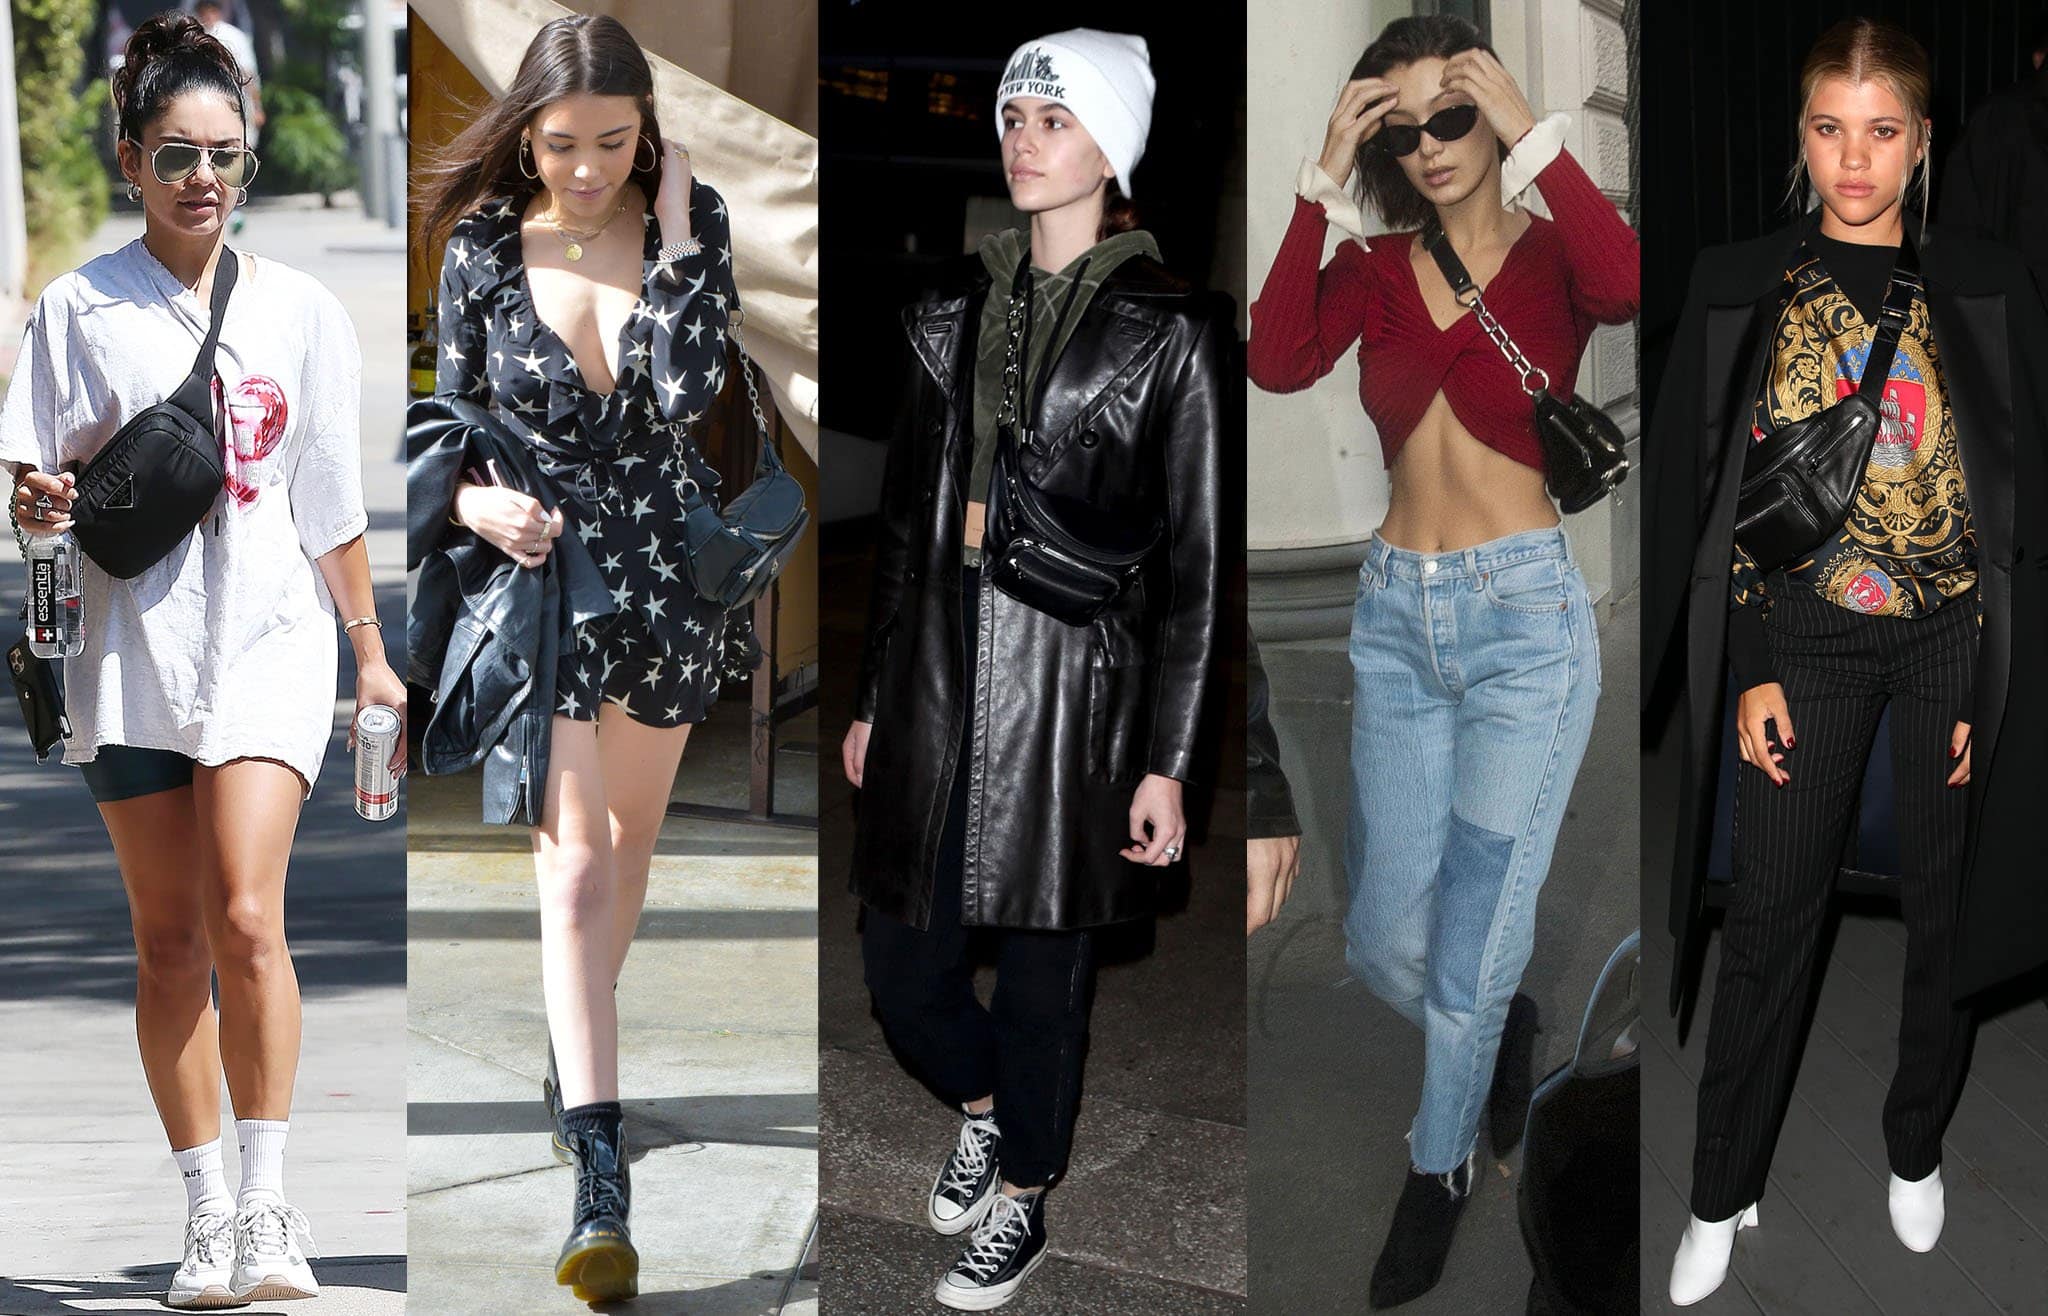 Vanessa Hudgens, Madison Beer, Kaia Gerber, Bella Hadid, and Sofia Richie carrying trendy sling bags